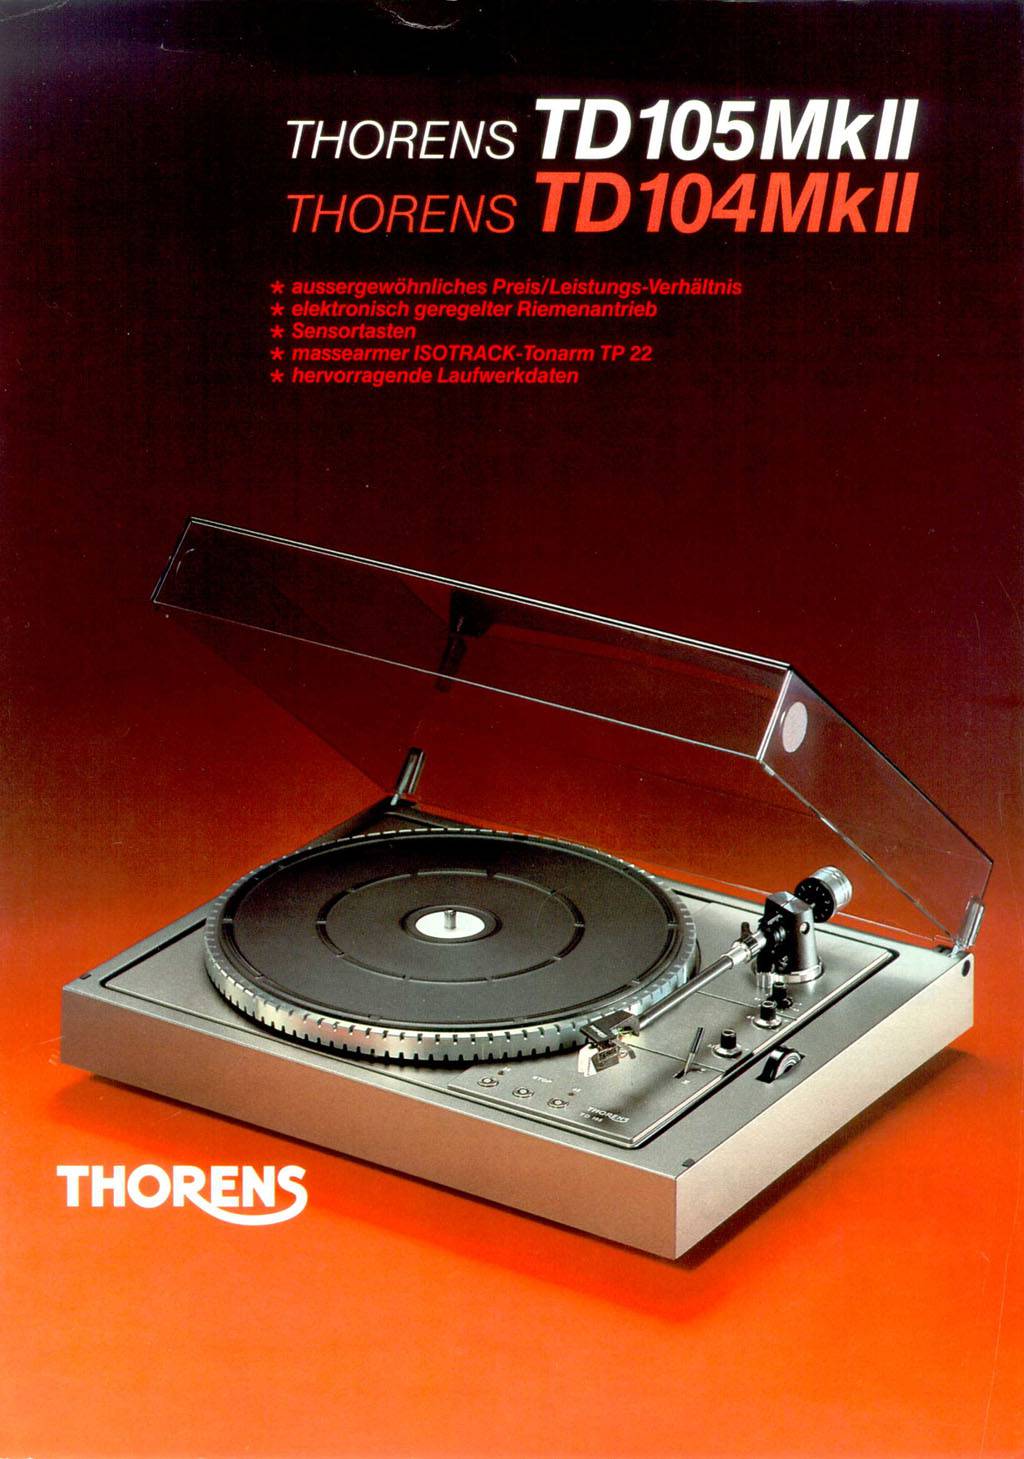 Thorens TD104 (TP22)